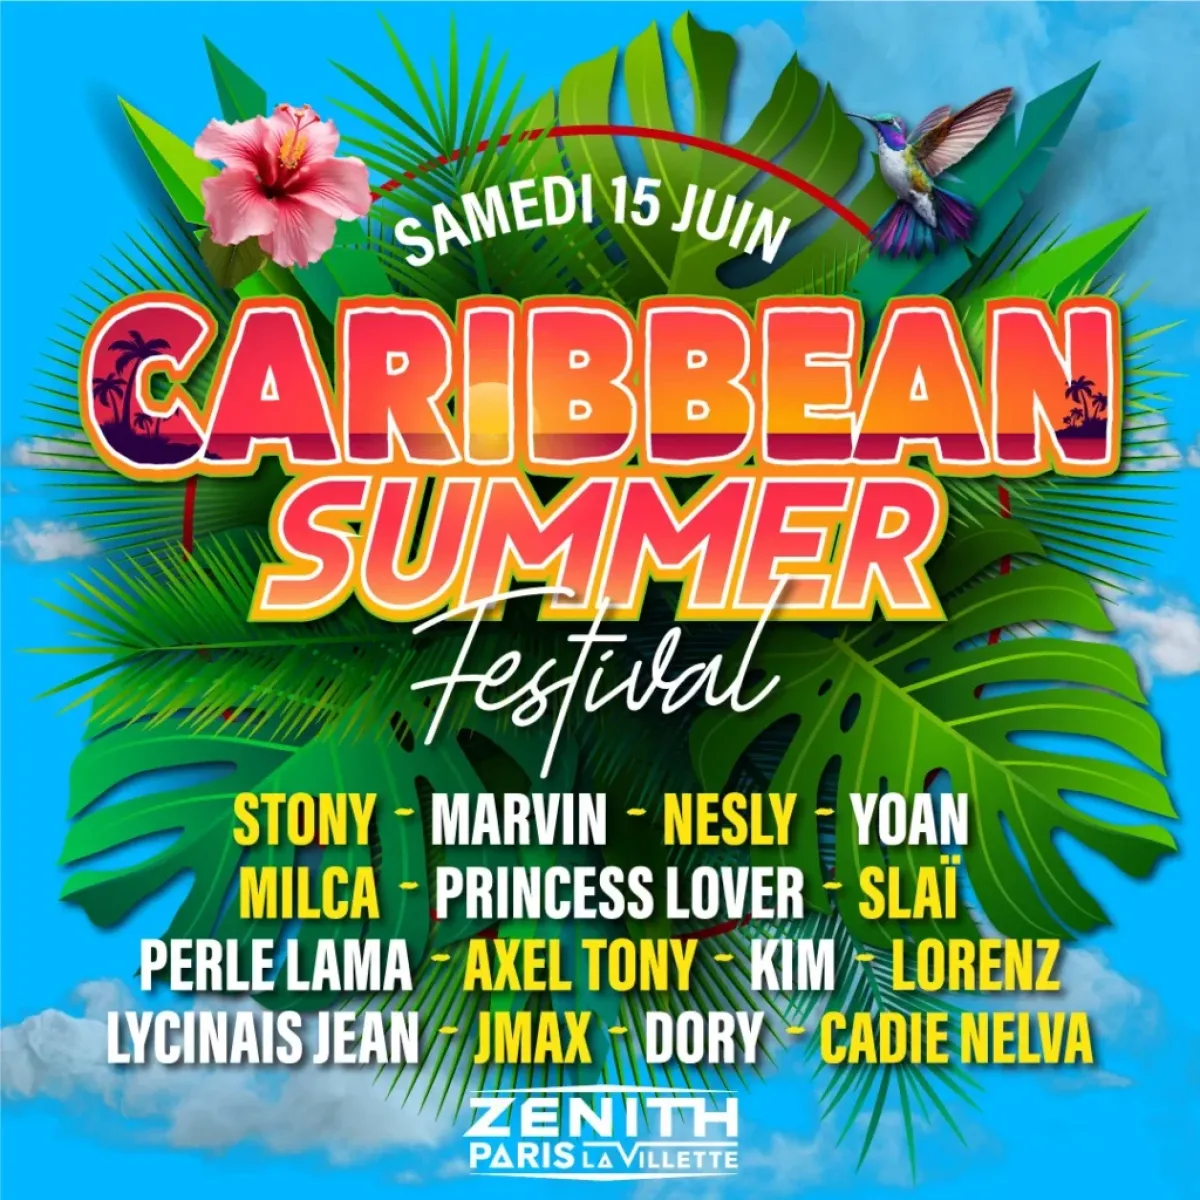 Caribbean Summer Festival en Zenith Paris Tickets